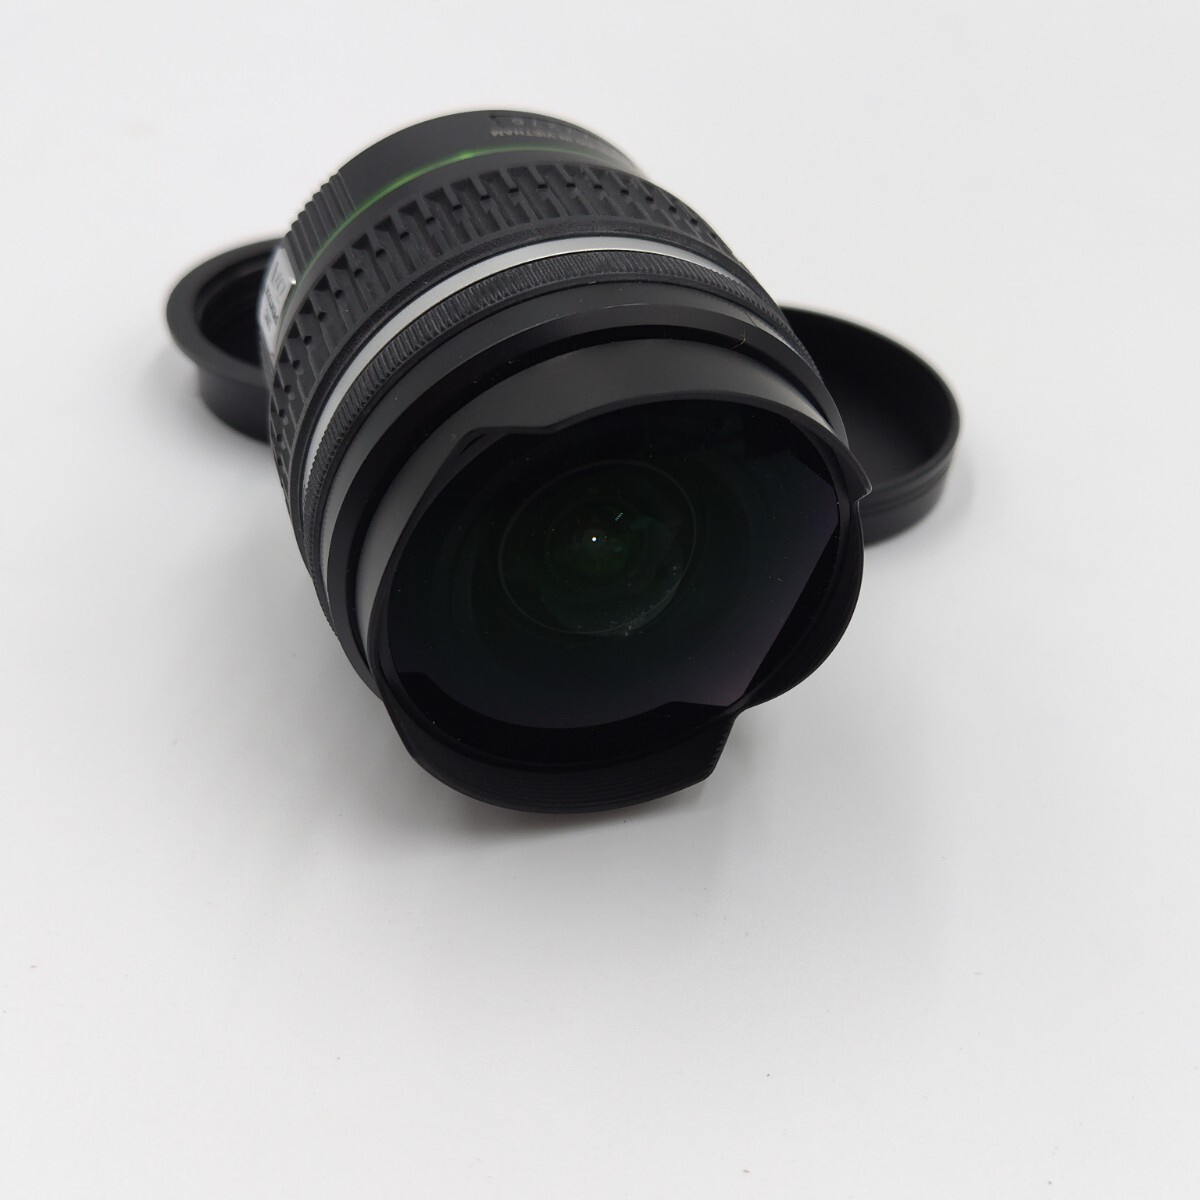 smc PENTAX Pentax DA 21580 10-17mm FISH-FYE fish I F3.5-4.5 ED[IF] fish eye lens control (NIS)